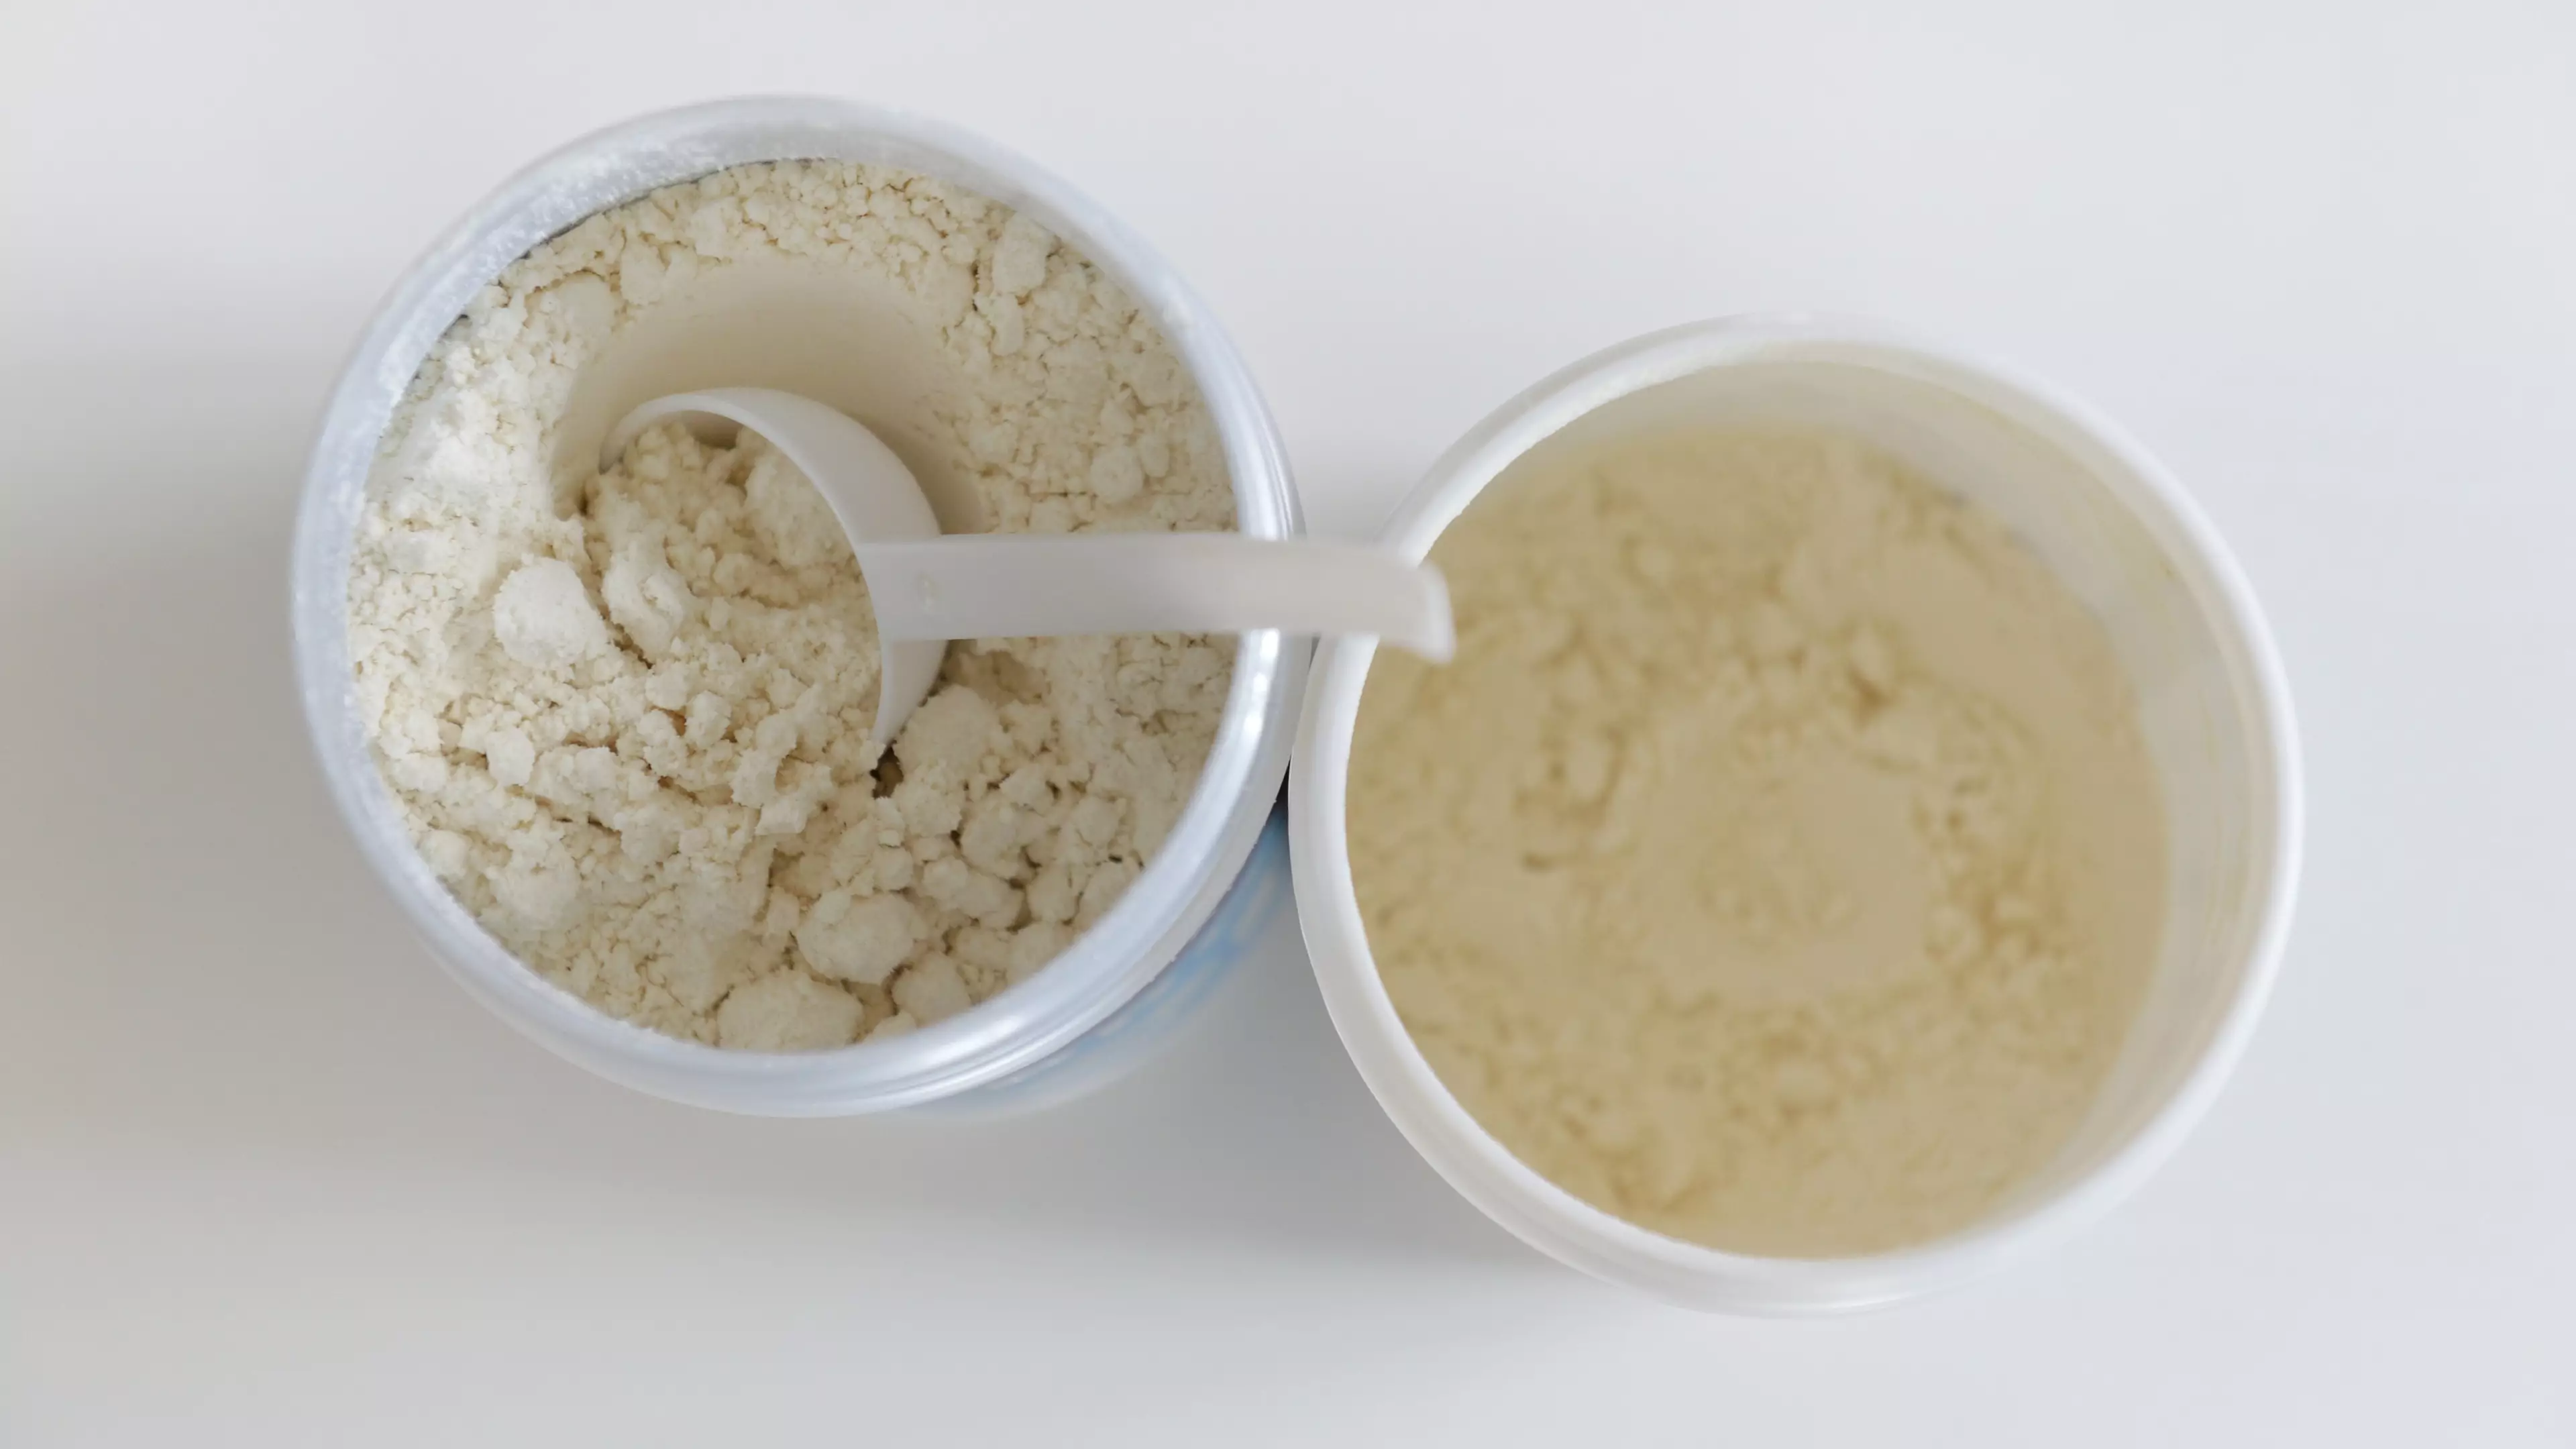 Supermarket Urgently Recalls Protein Powder Containing Unexpected Ingredient